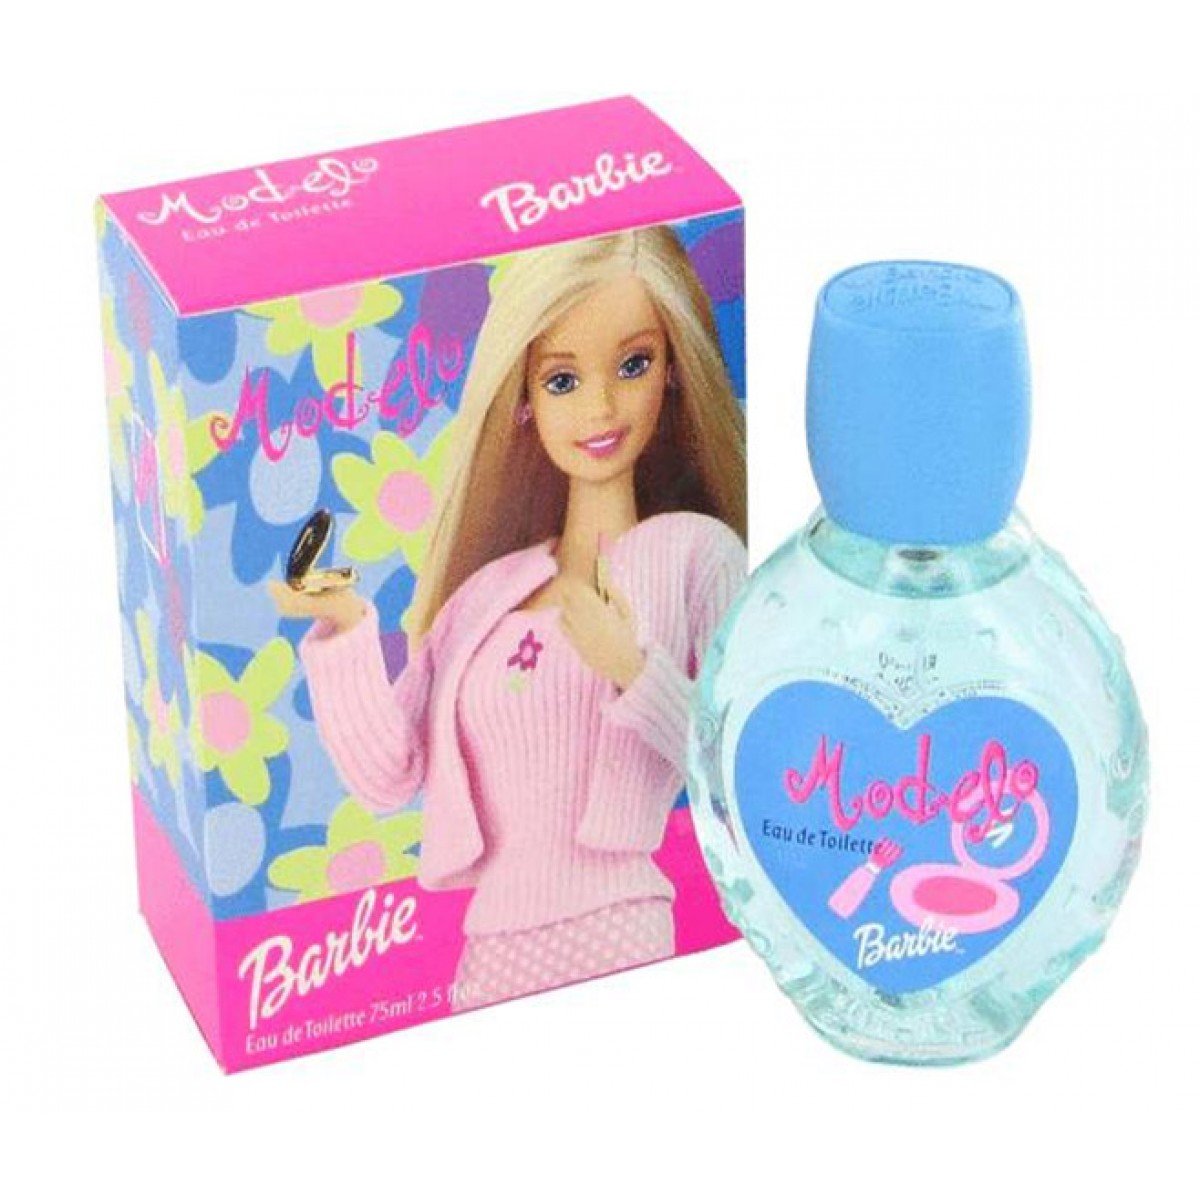 BARBIE MODELO by Mattel EDT SPRAY 2.5 OZ – Women’s Dreamy Perfume